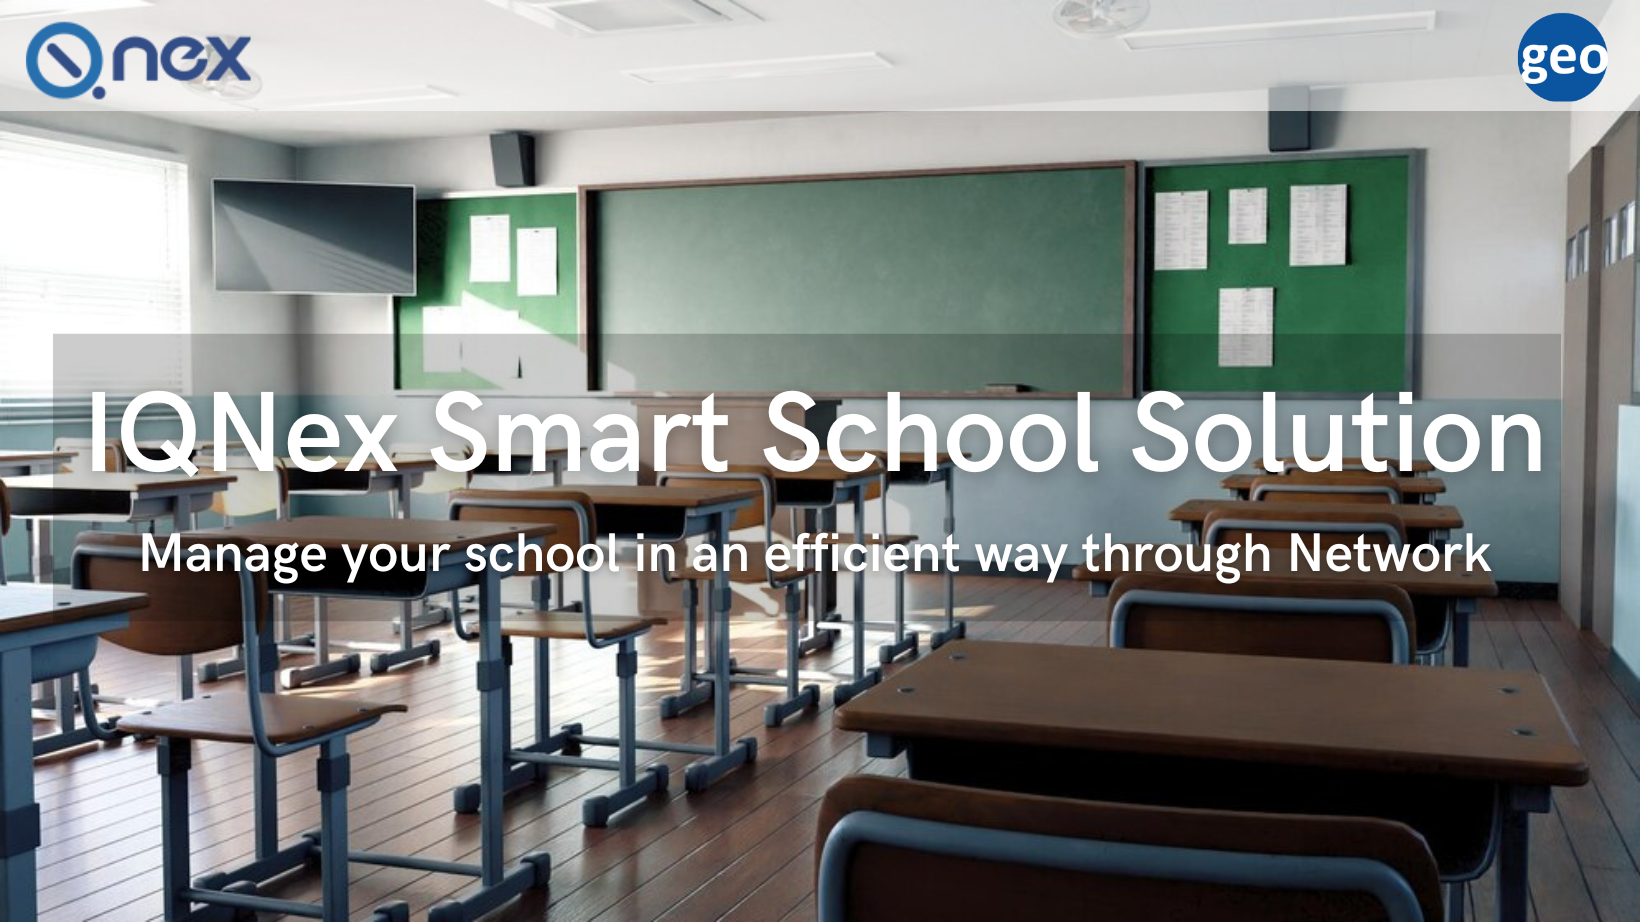 IQNex: Smart School Solution